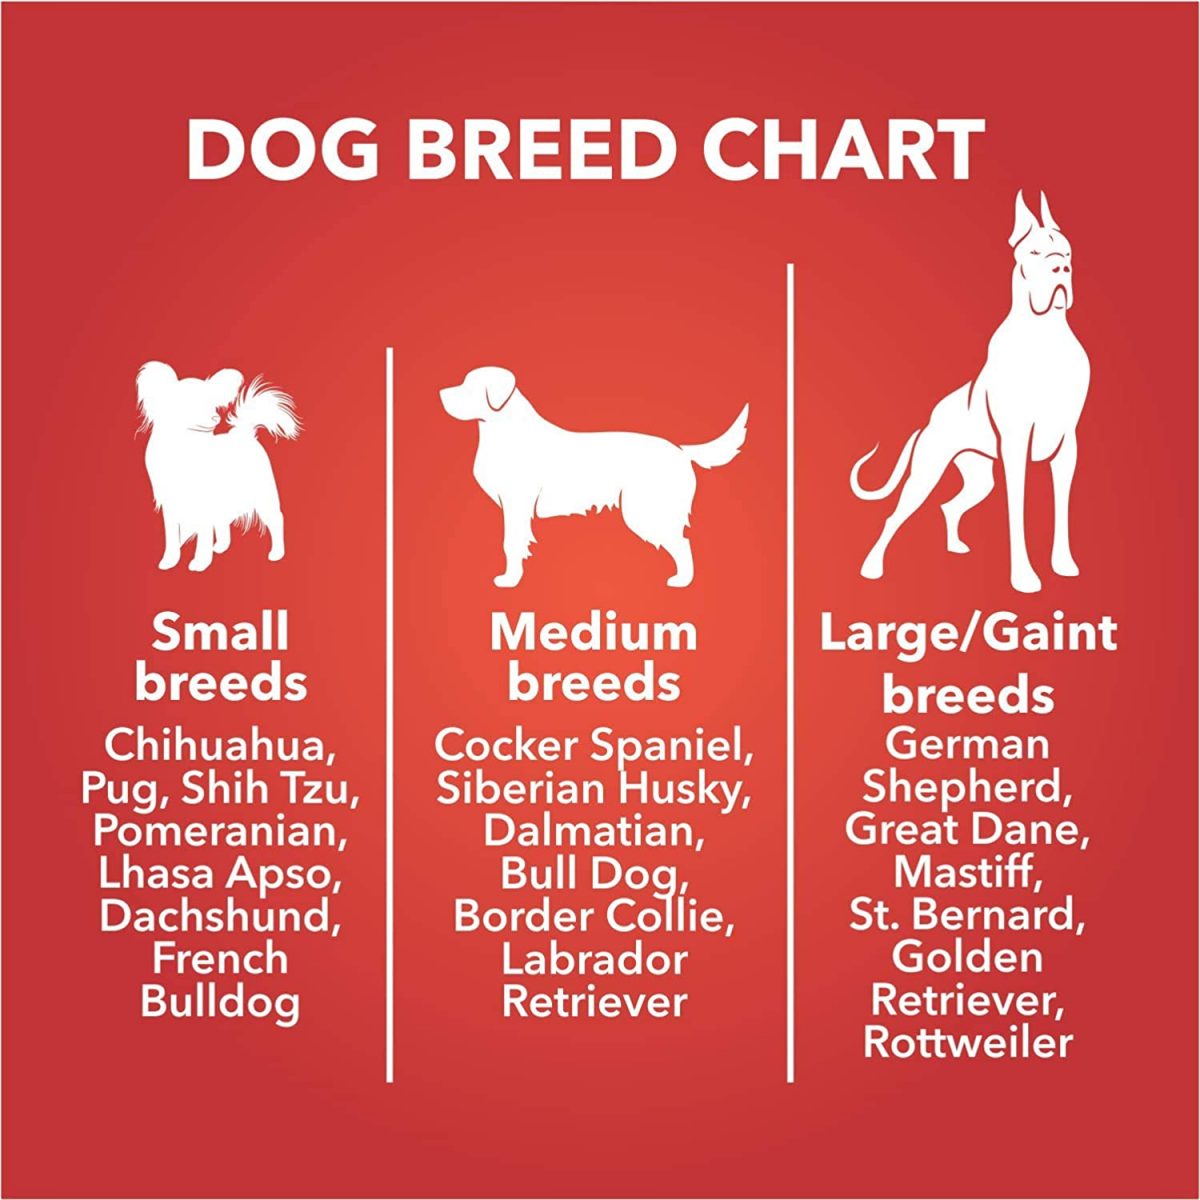 Dog breed chart